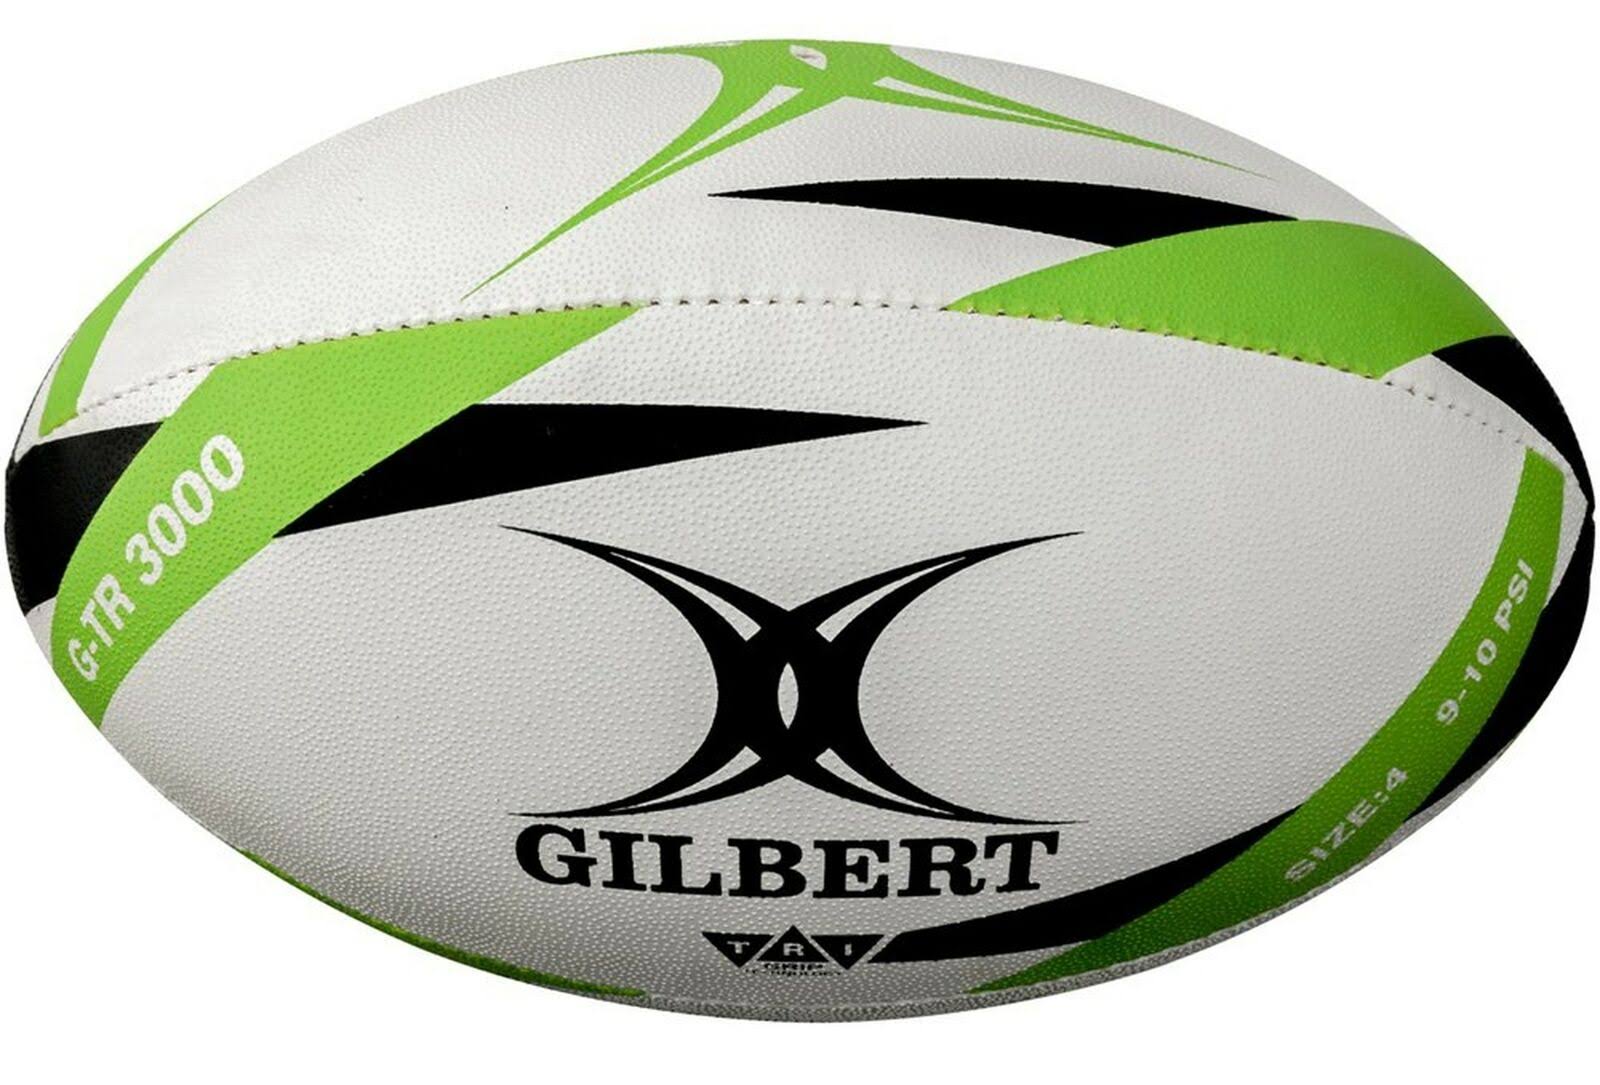 Gilbert Rugby Ball - White/Green